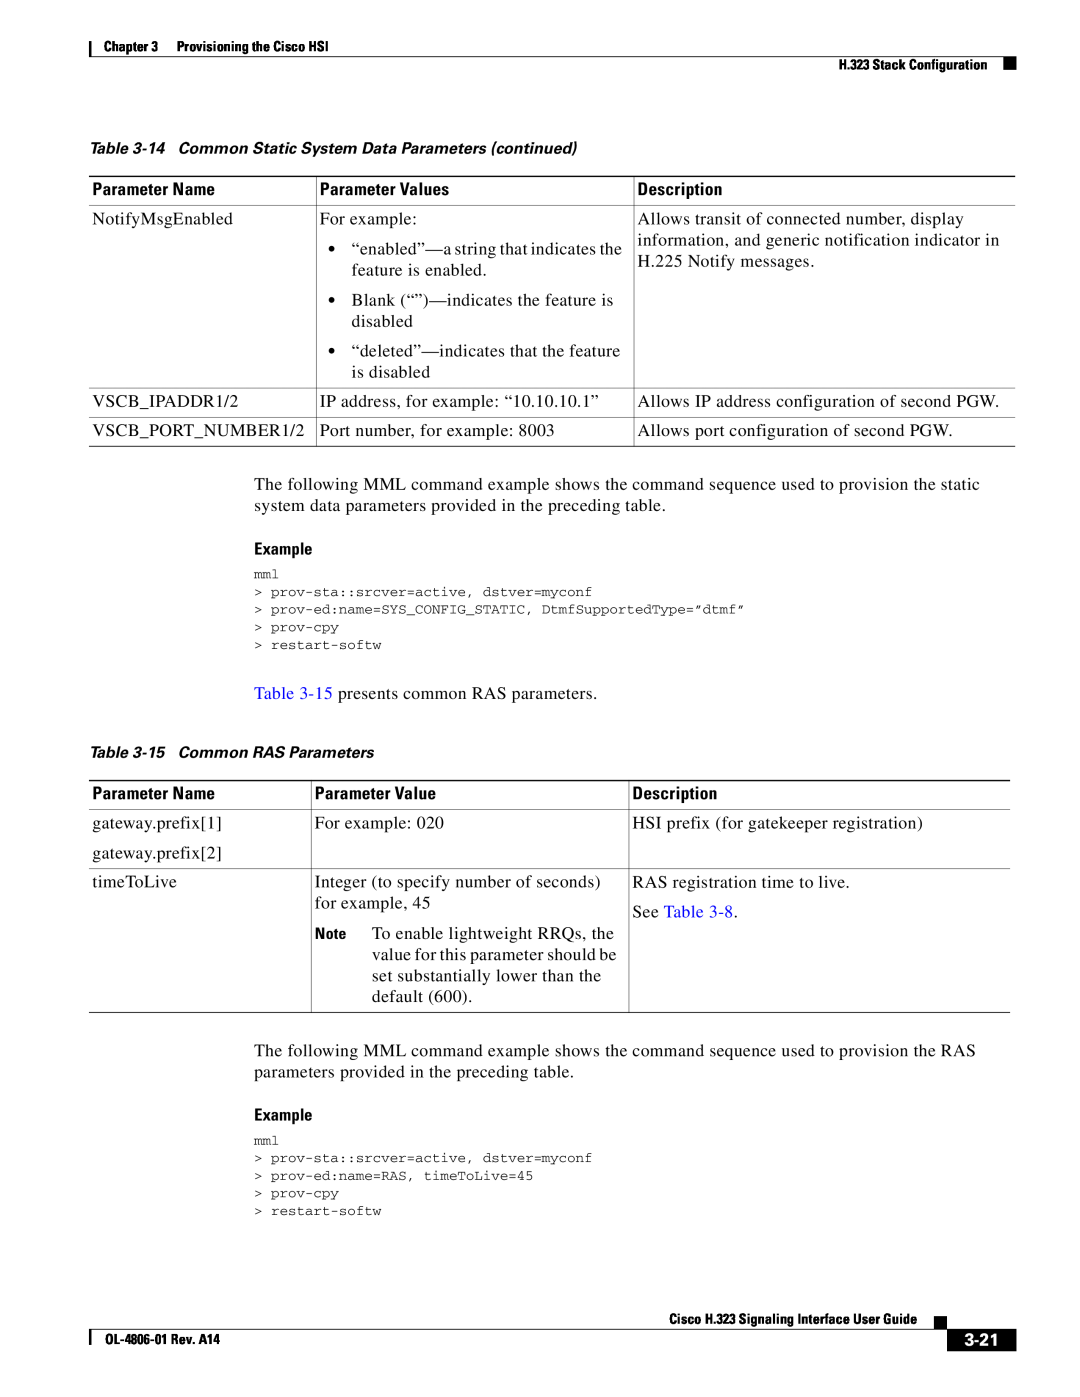 Cisco Systems H.323 appendix See Table, 3-21, Parameter Name, Parameter Values, Description, Example 